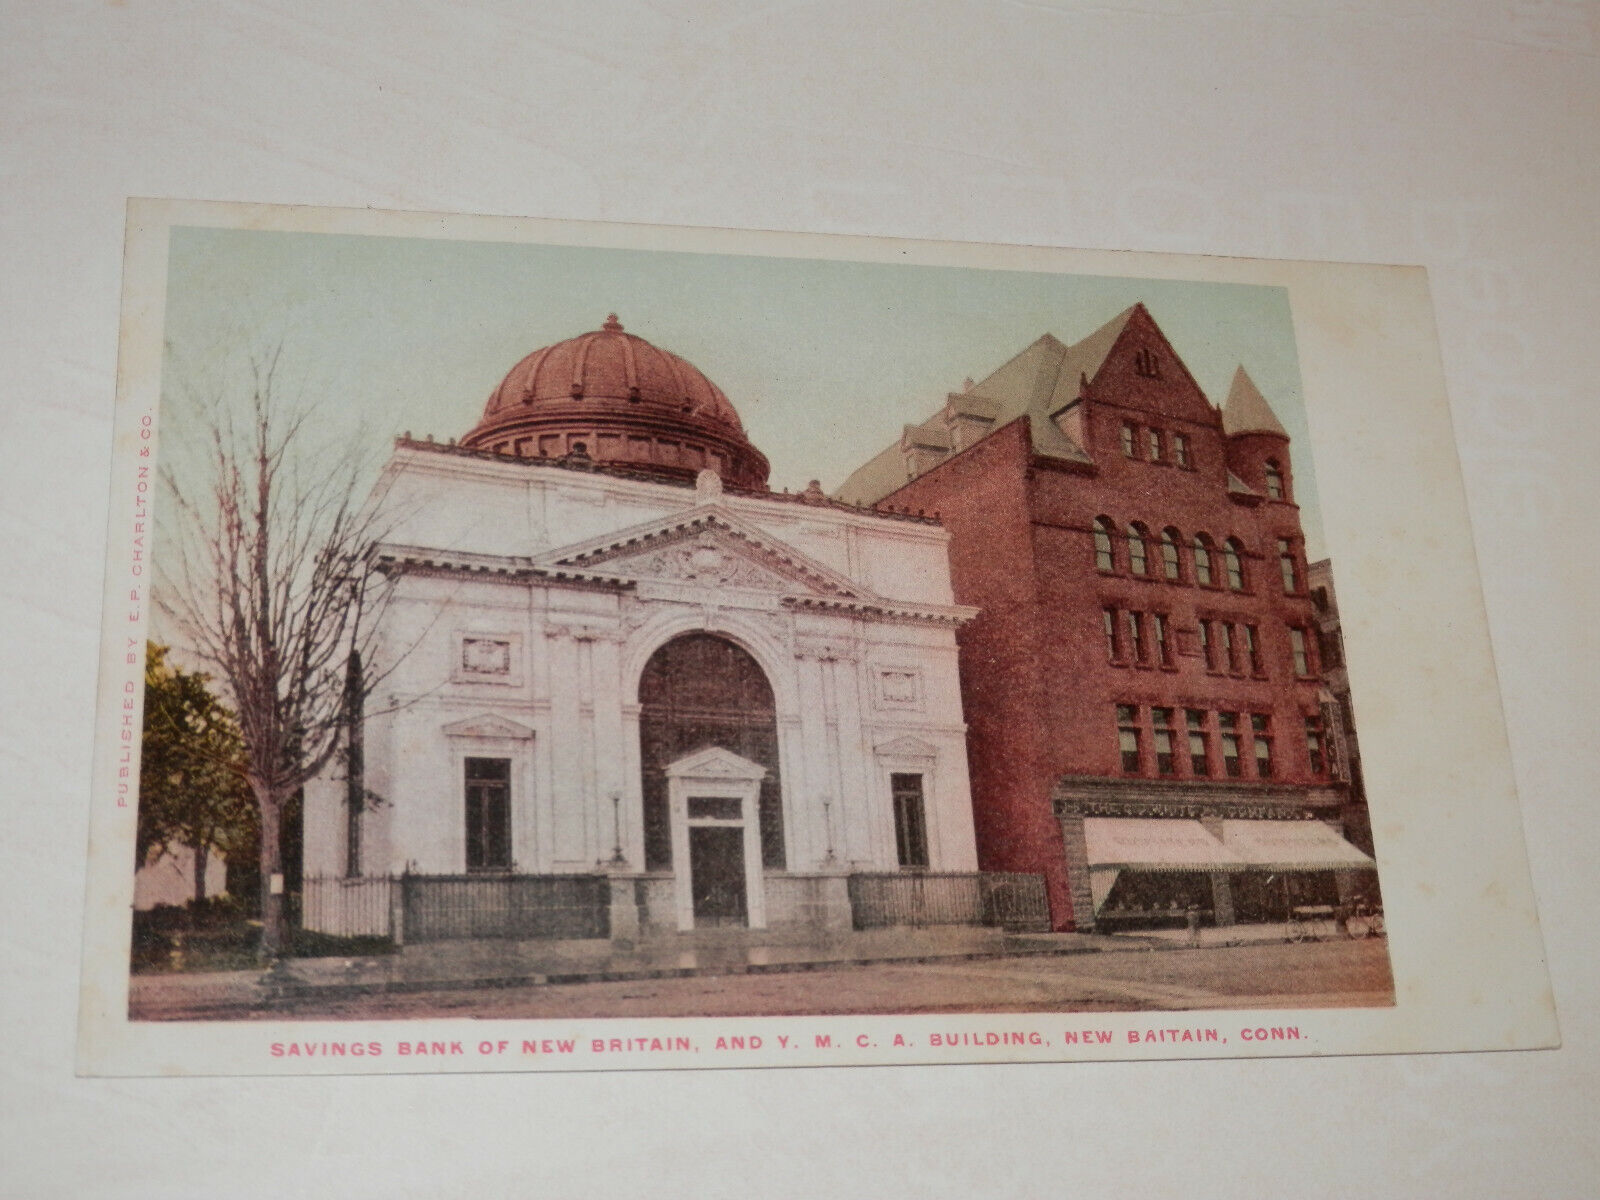 NEW BRITAIN CT - 1901-1907 ERA POSTCARD - SAVINGS BANK and Y.M.C.A. BUILDING